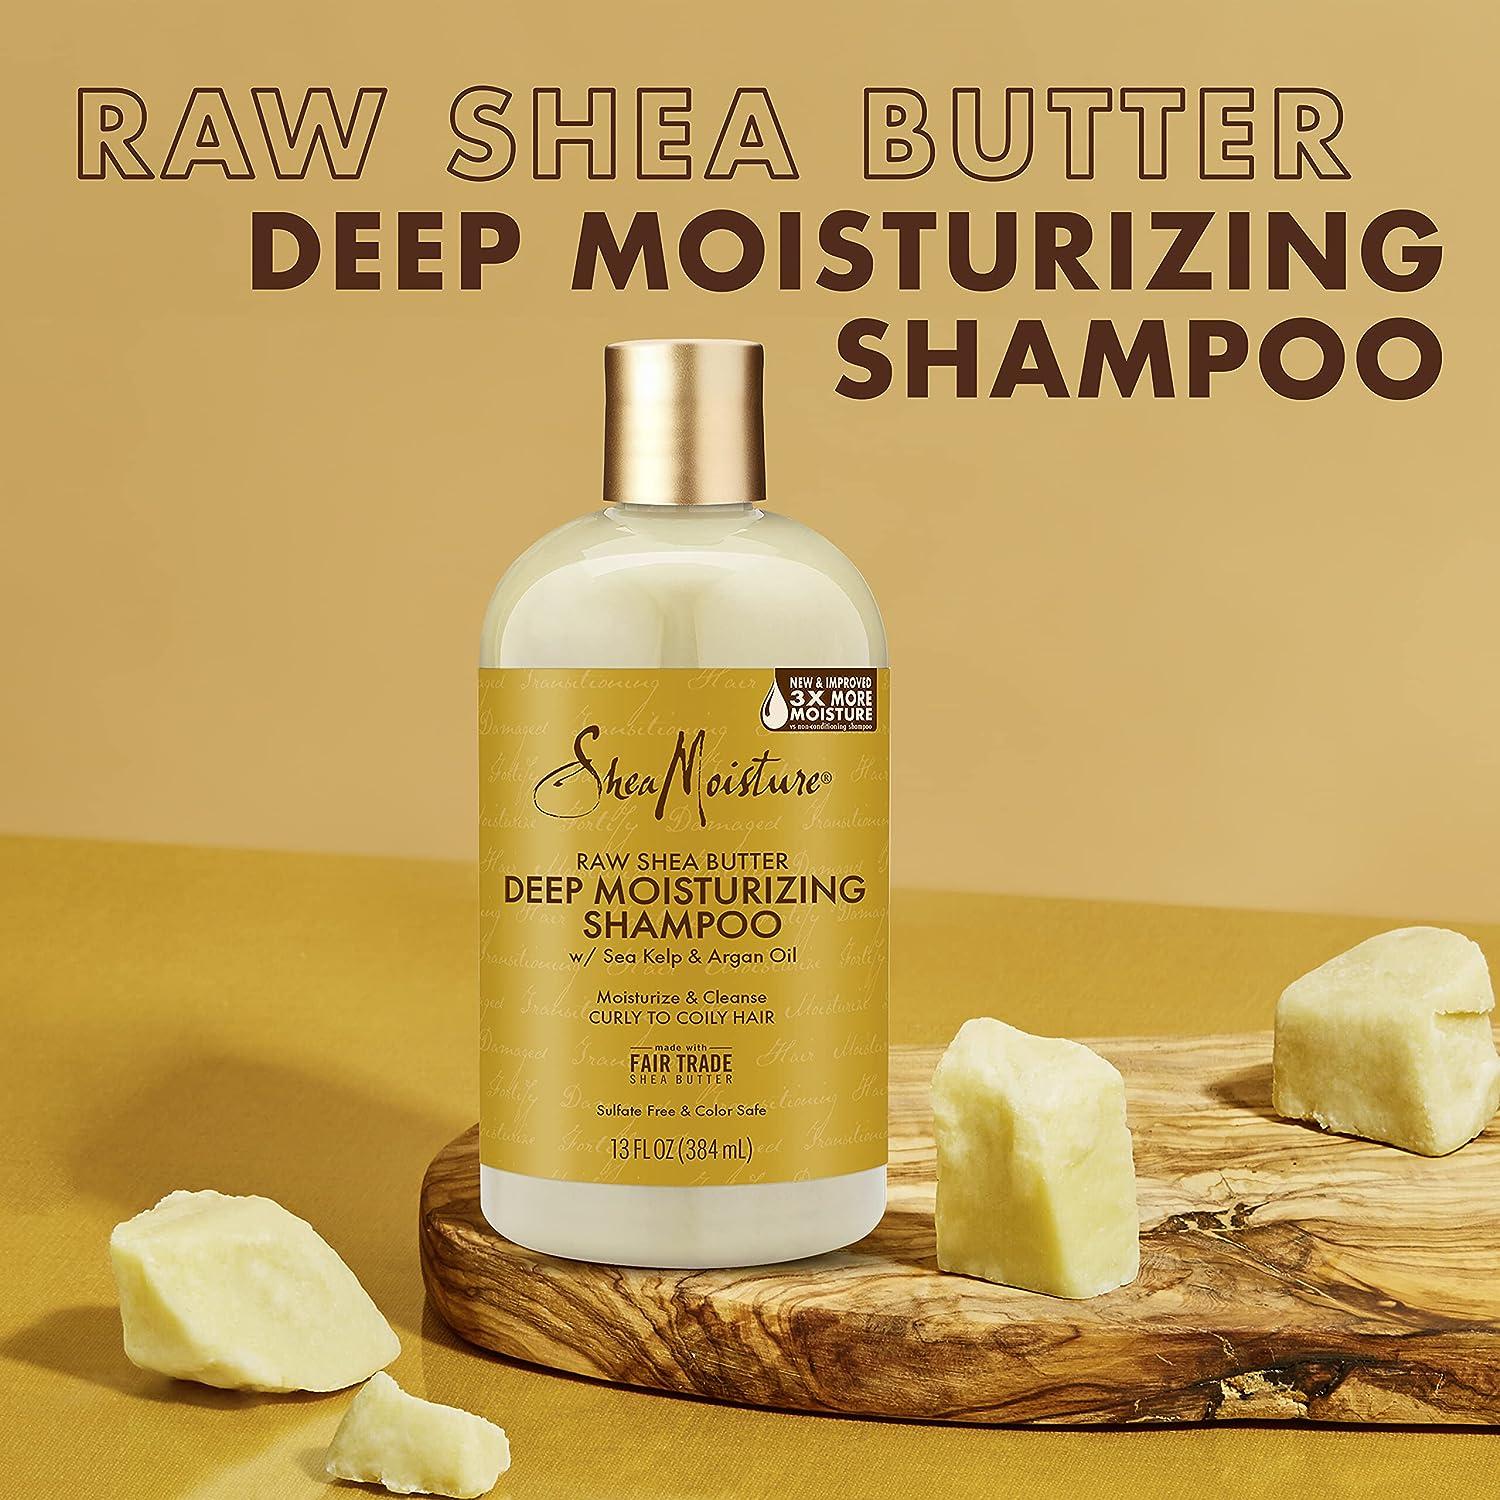 SheaMoisture Deep Moisturizing Leave In Conditioner, Raw Shea Butter, 11.5  fl oz